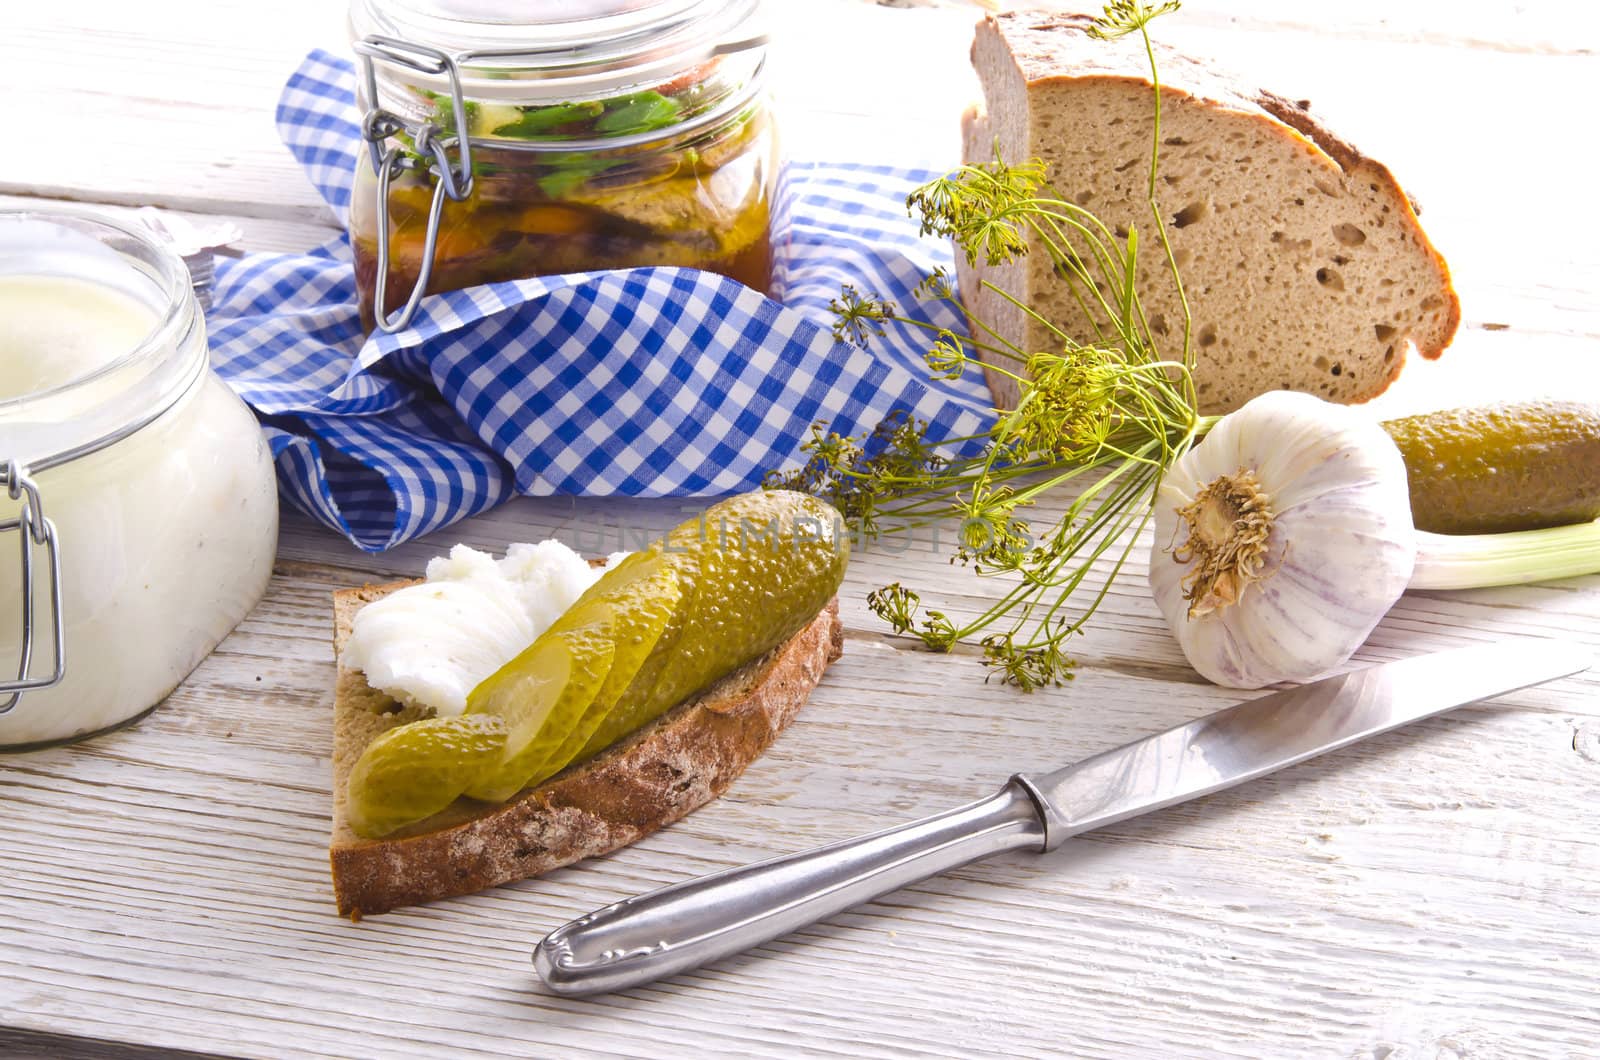 pickled gherkins and onions  by Darius.Dzinnik